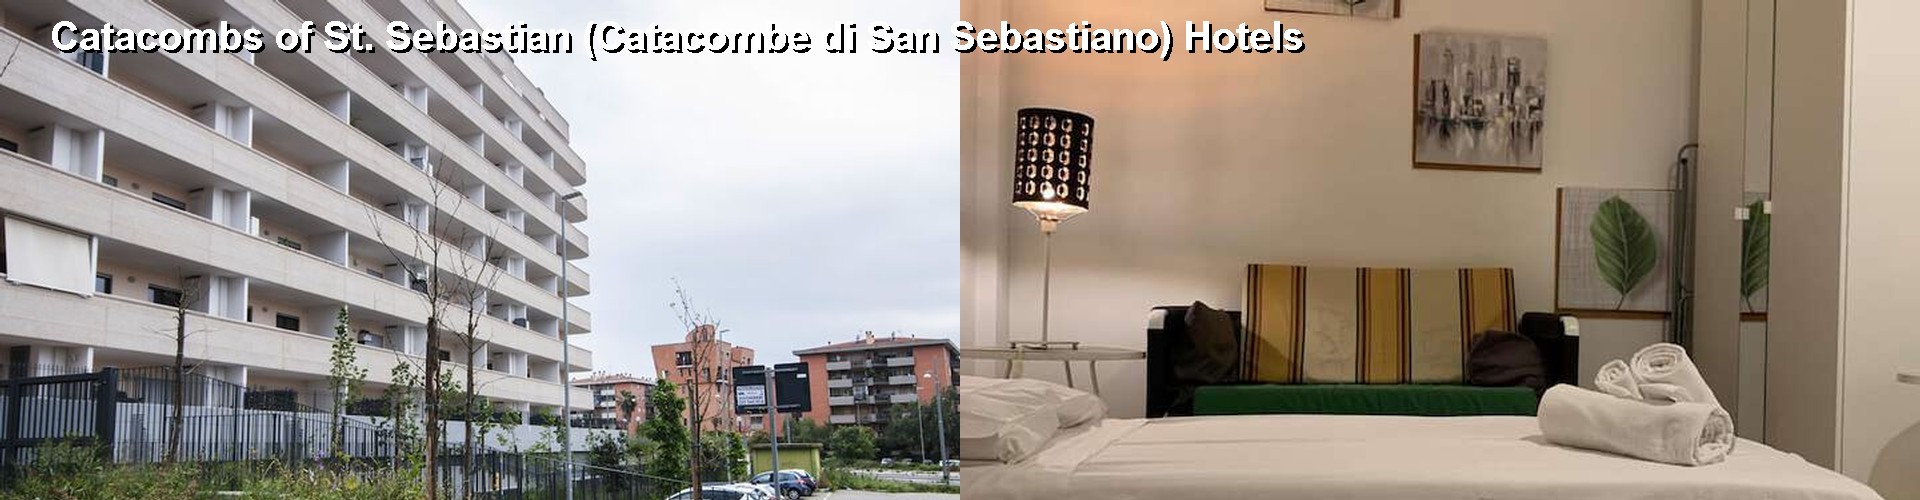 5 Best Hotels near Catacombs of St. Sebastian (Catacombe di San Sebastiano)